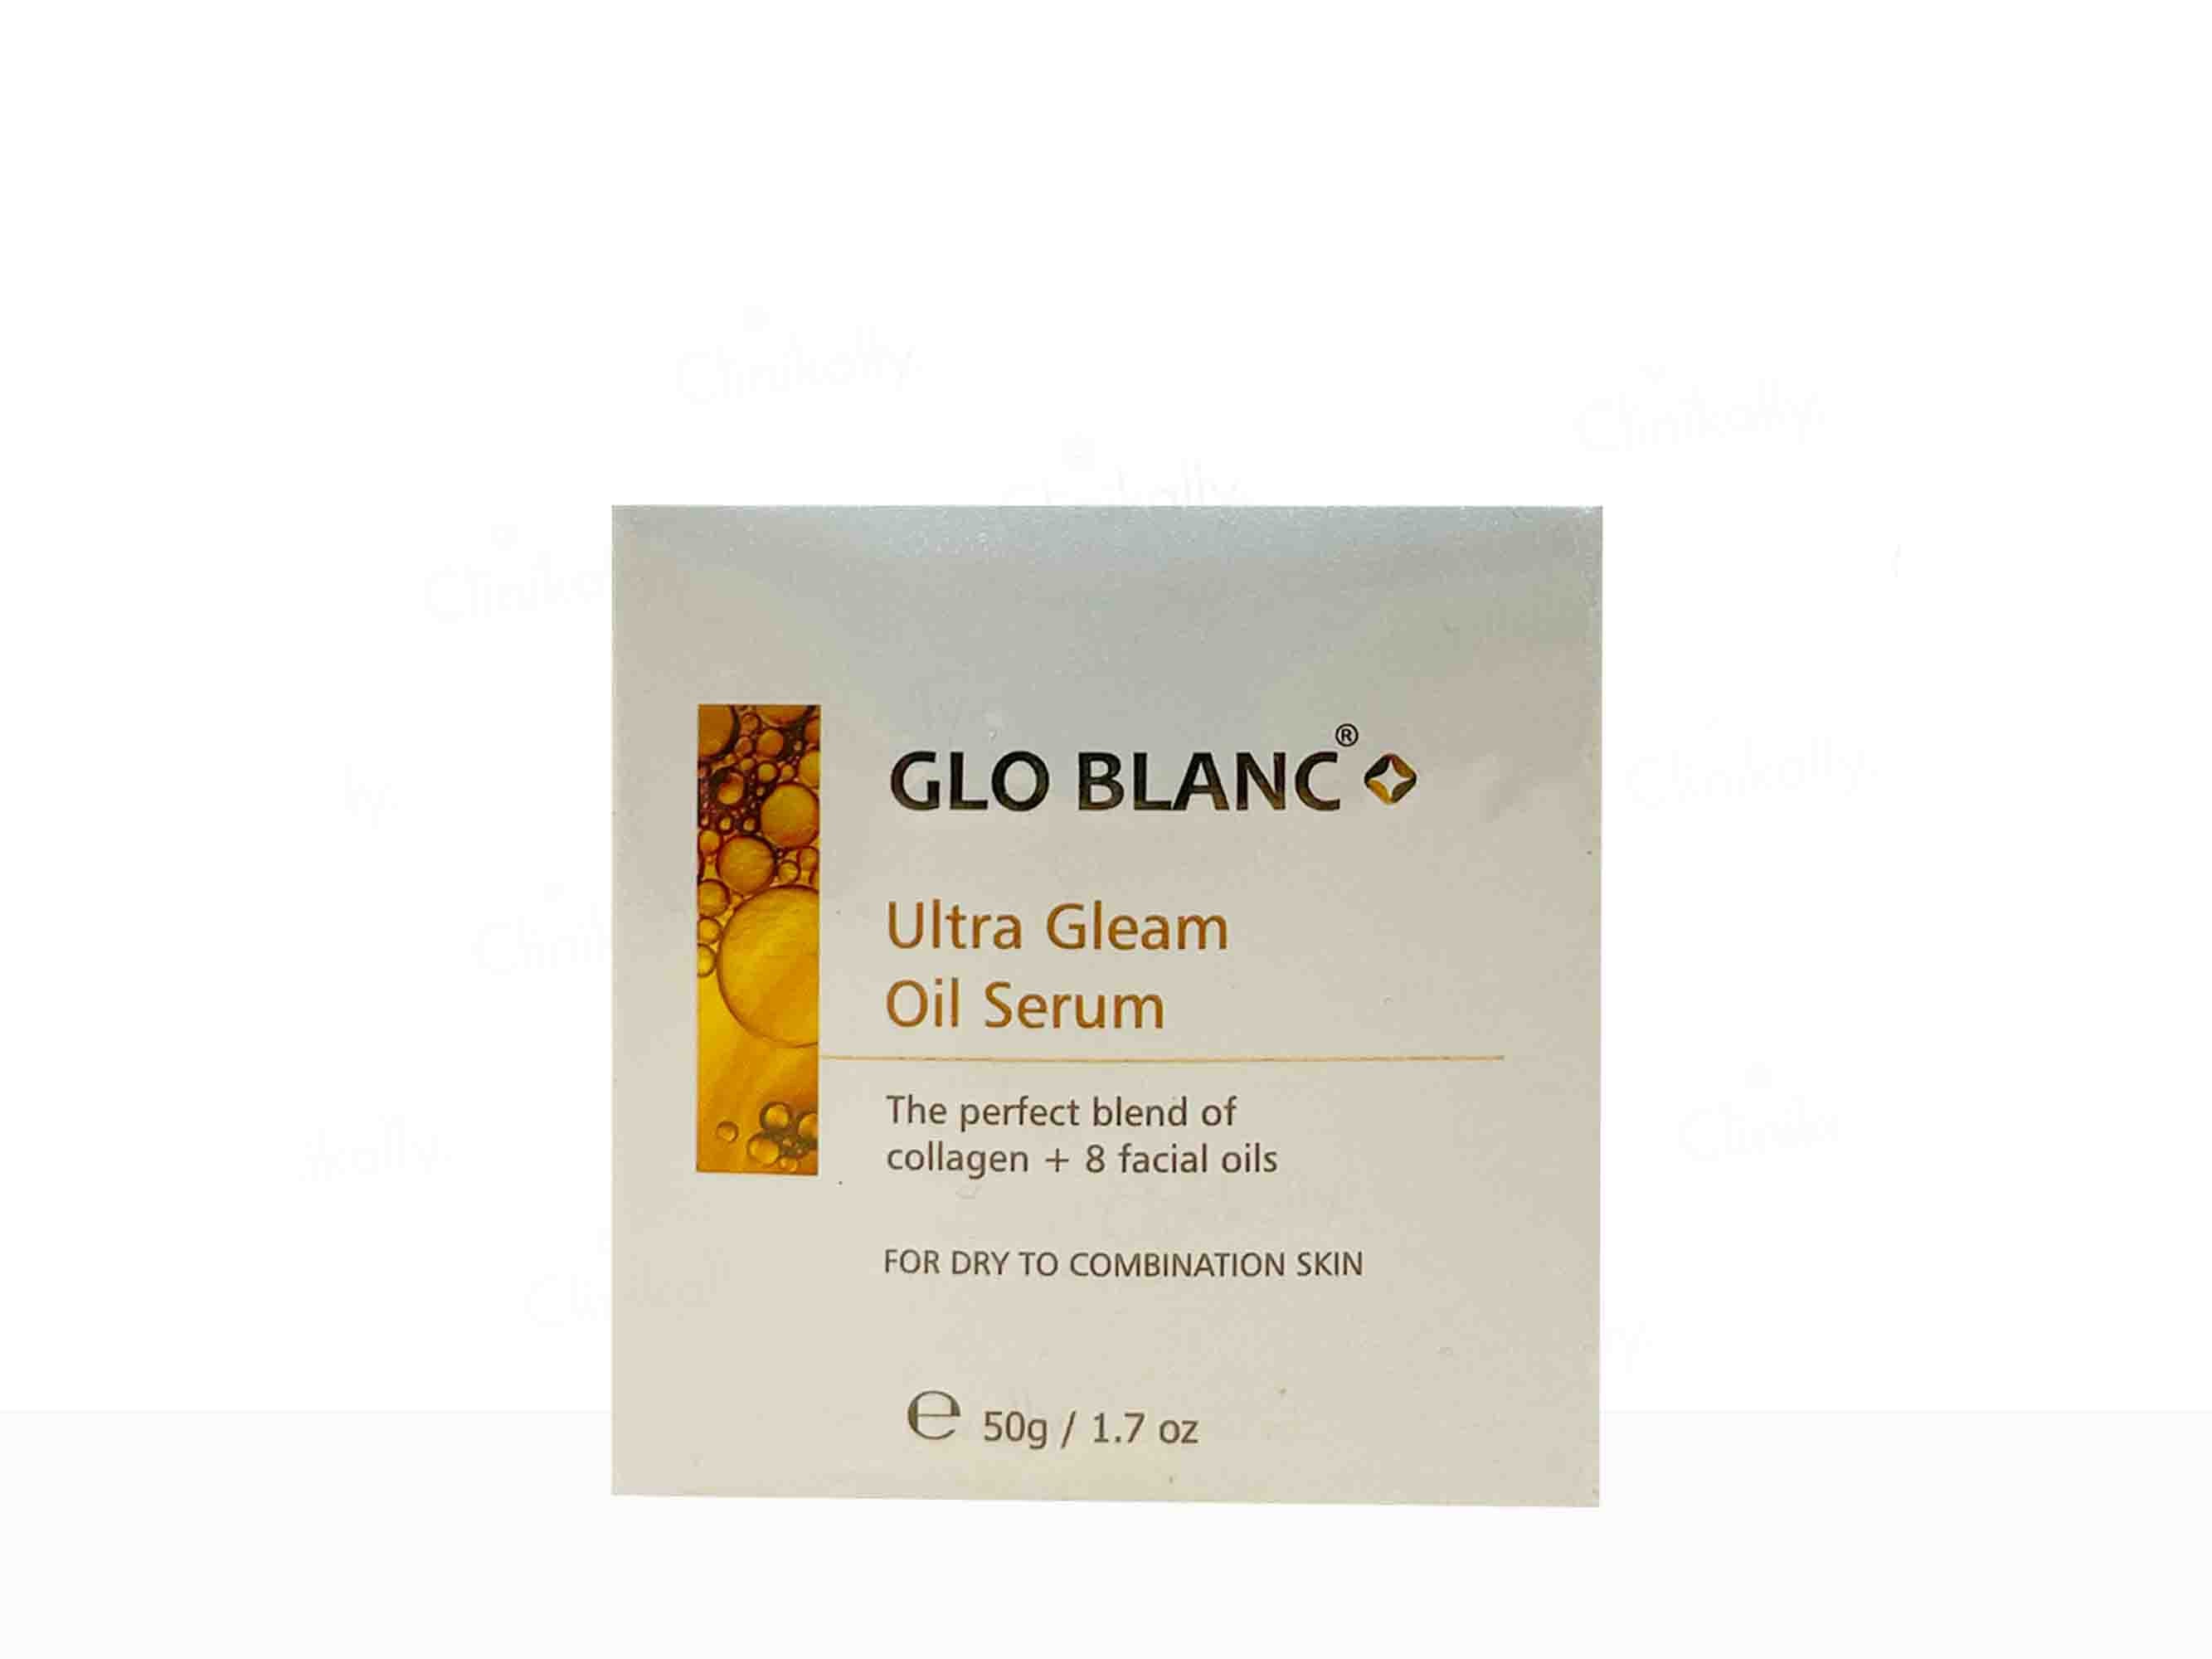 Glo Blanc Ultra Gleam Oil Serum